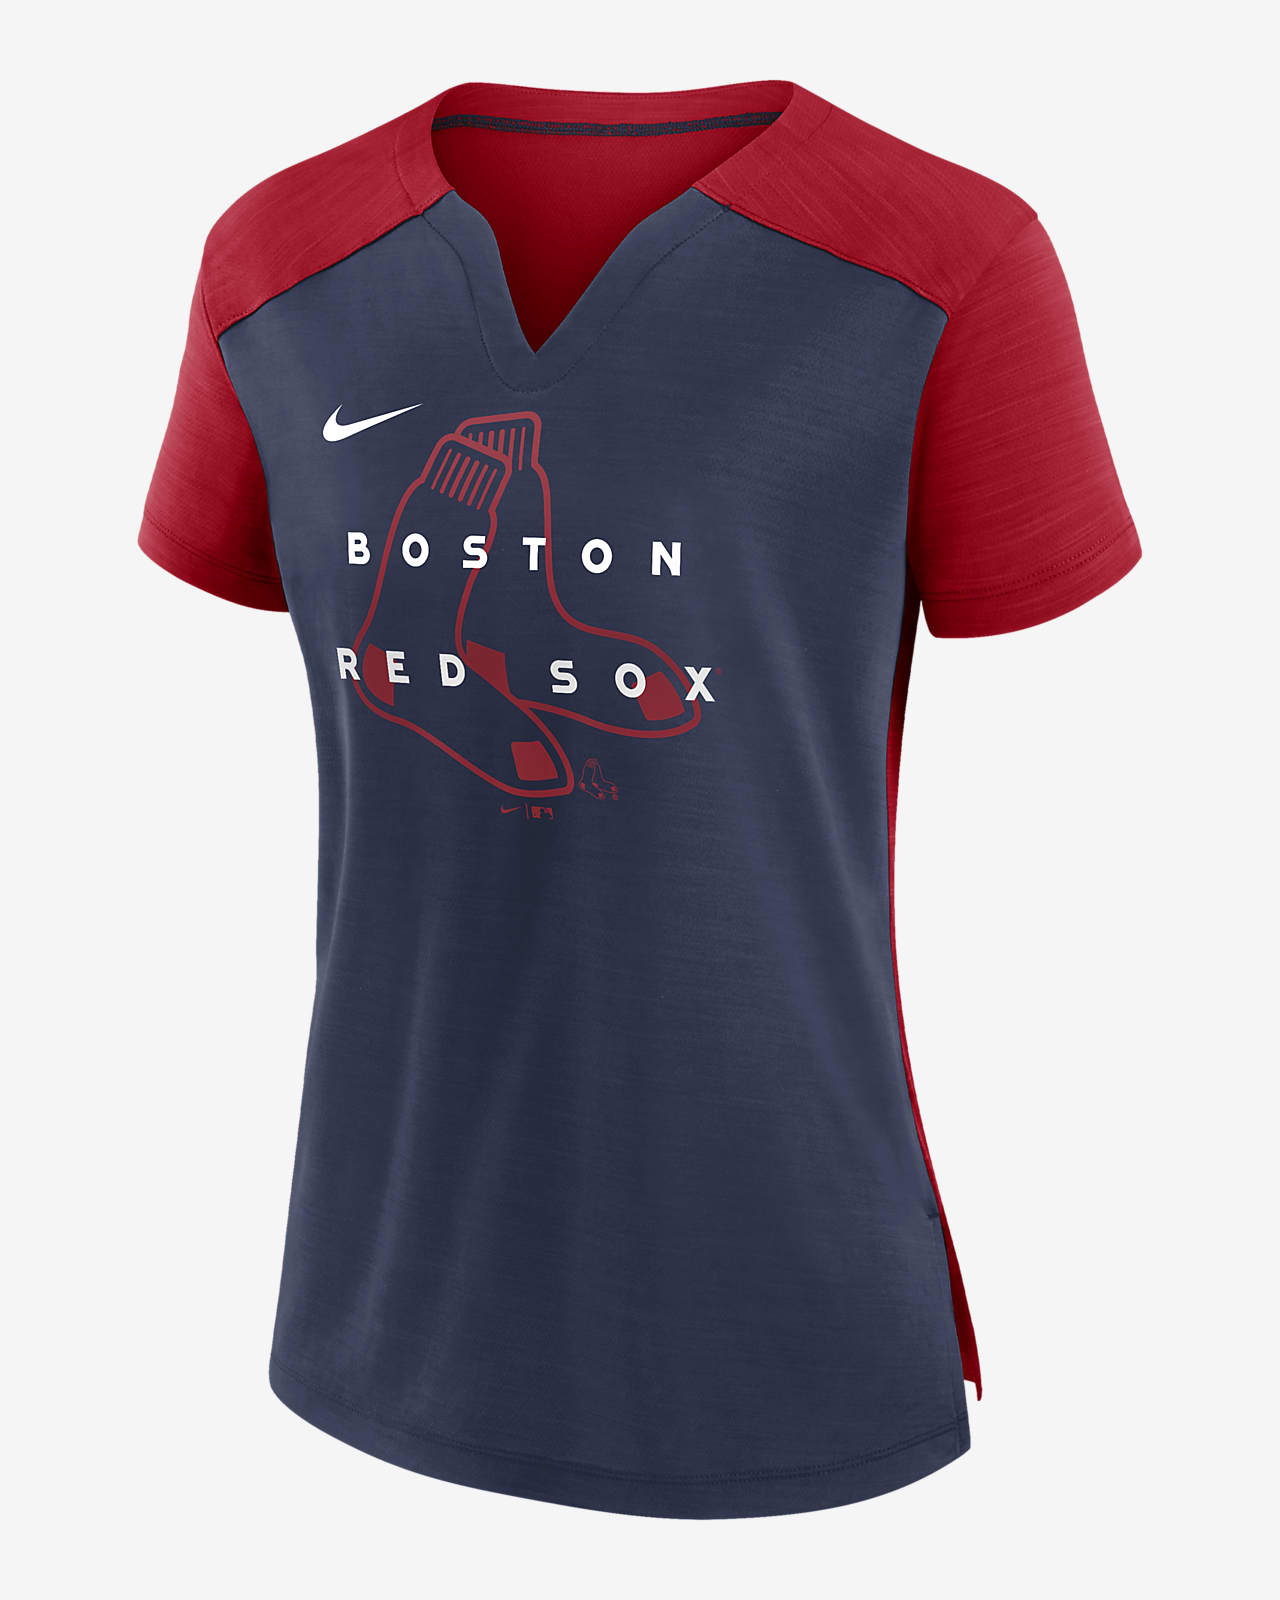 boston red sox womens shirts